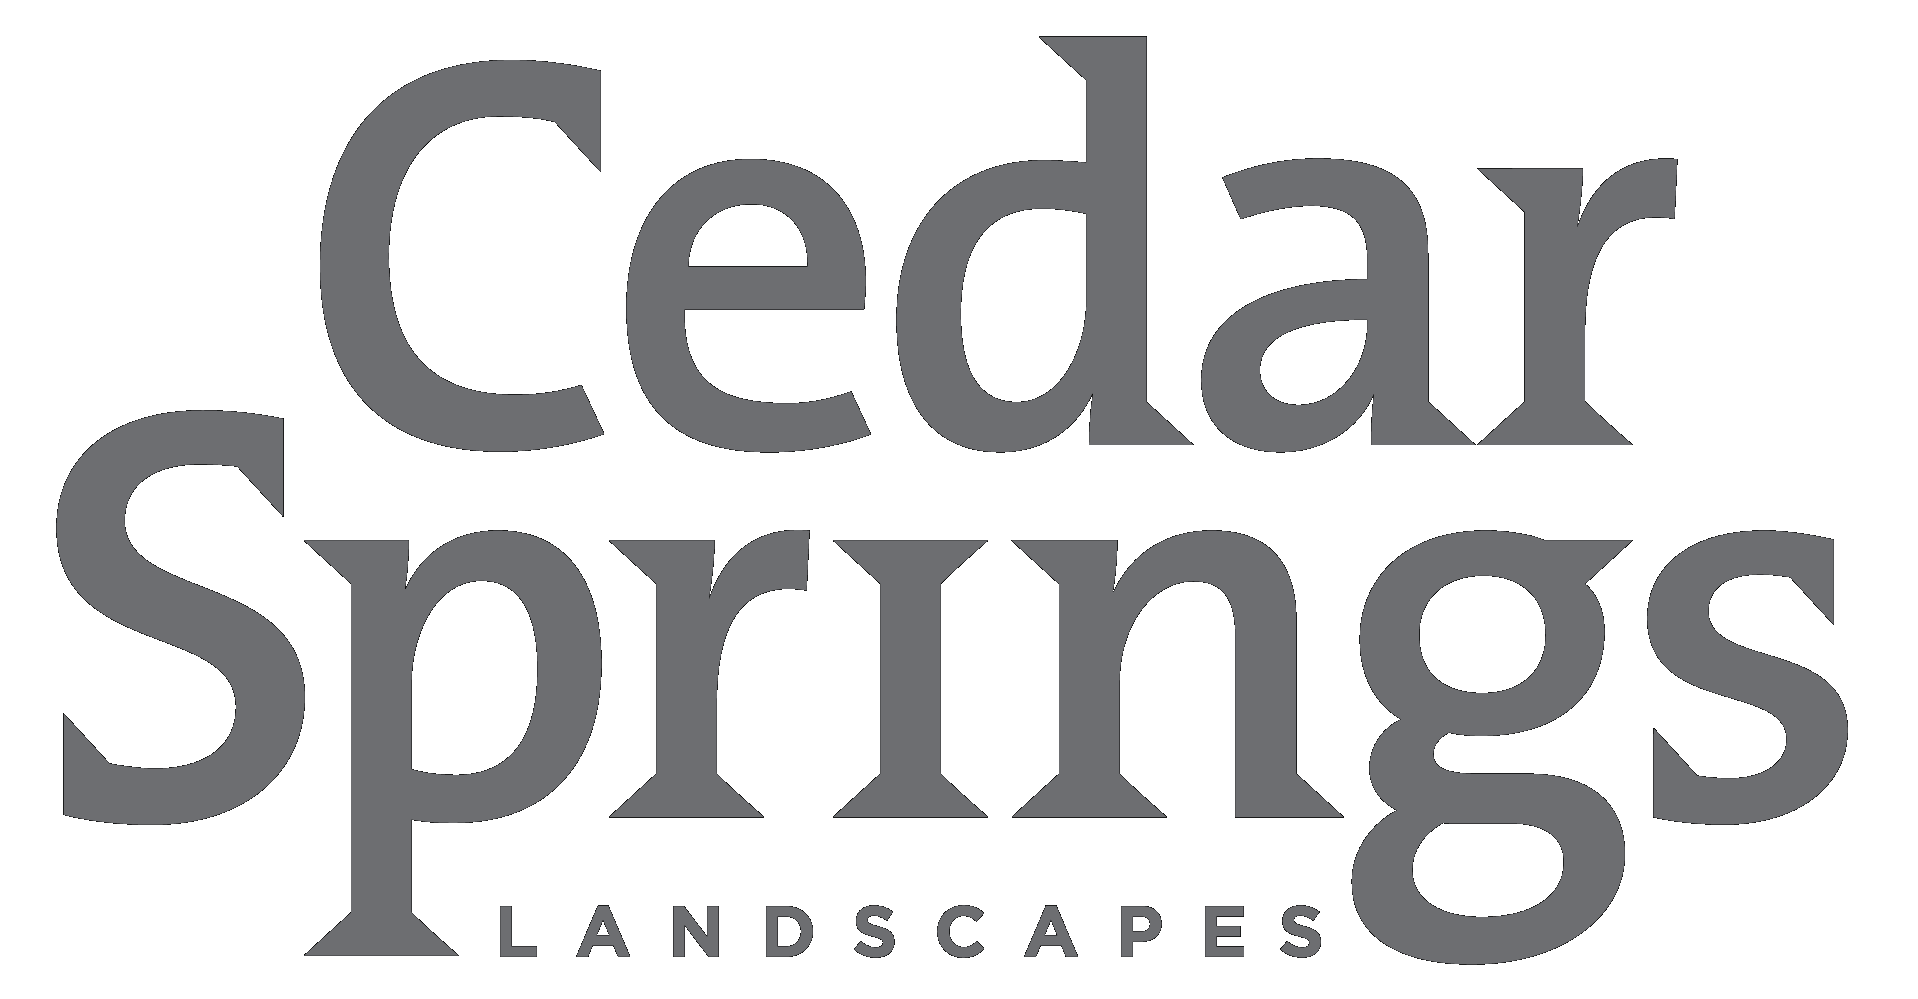 CED-Logo-CMYK-70% Black-Landscapes-CS5-cropped-stacked